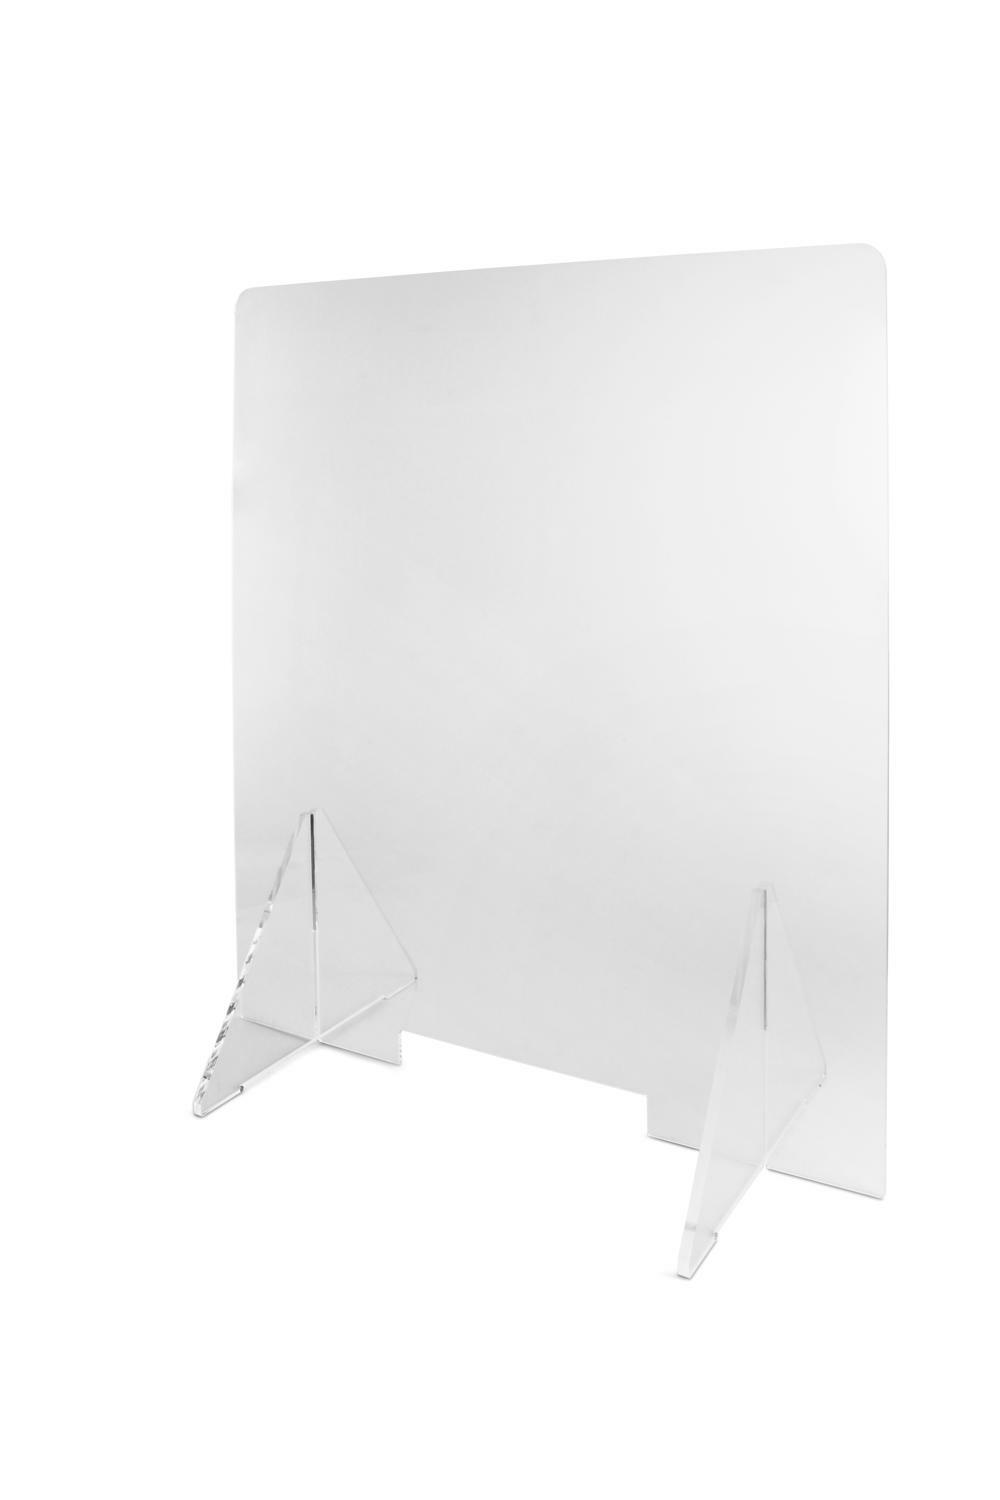 Ochranný štít na pult s okénkem 23 x 3 cm, transparentní, rozměr 60 x 65 cm